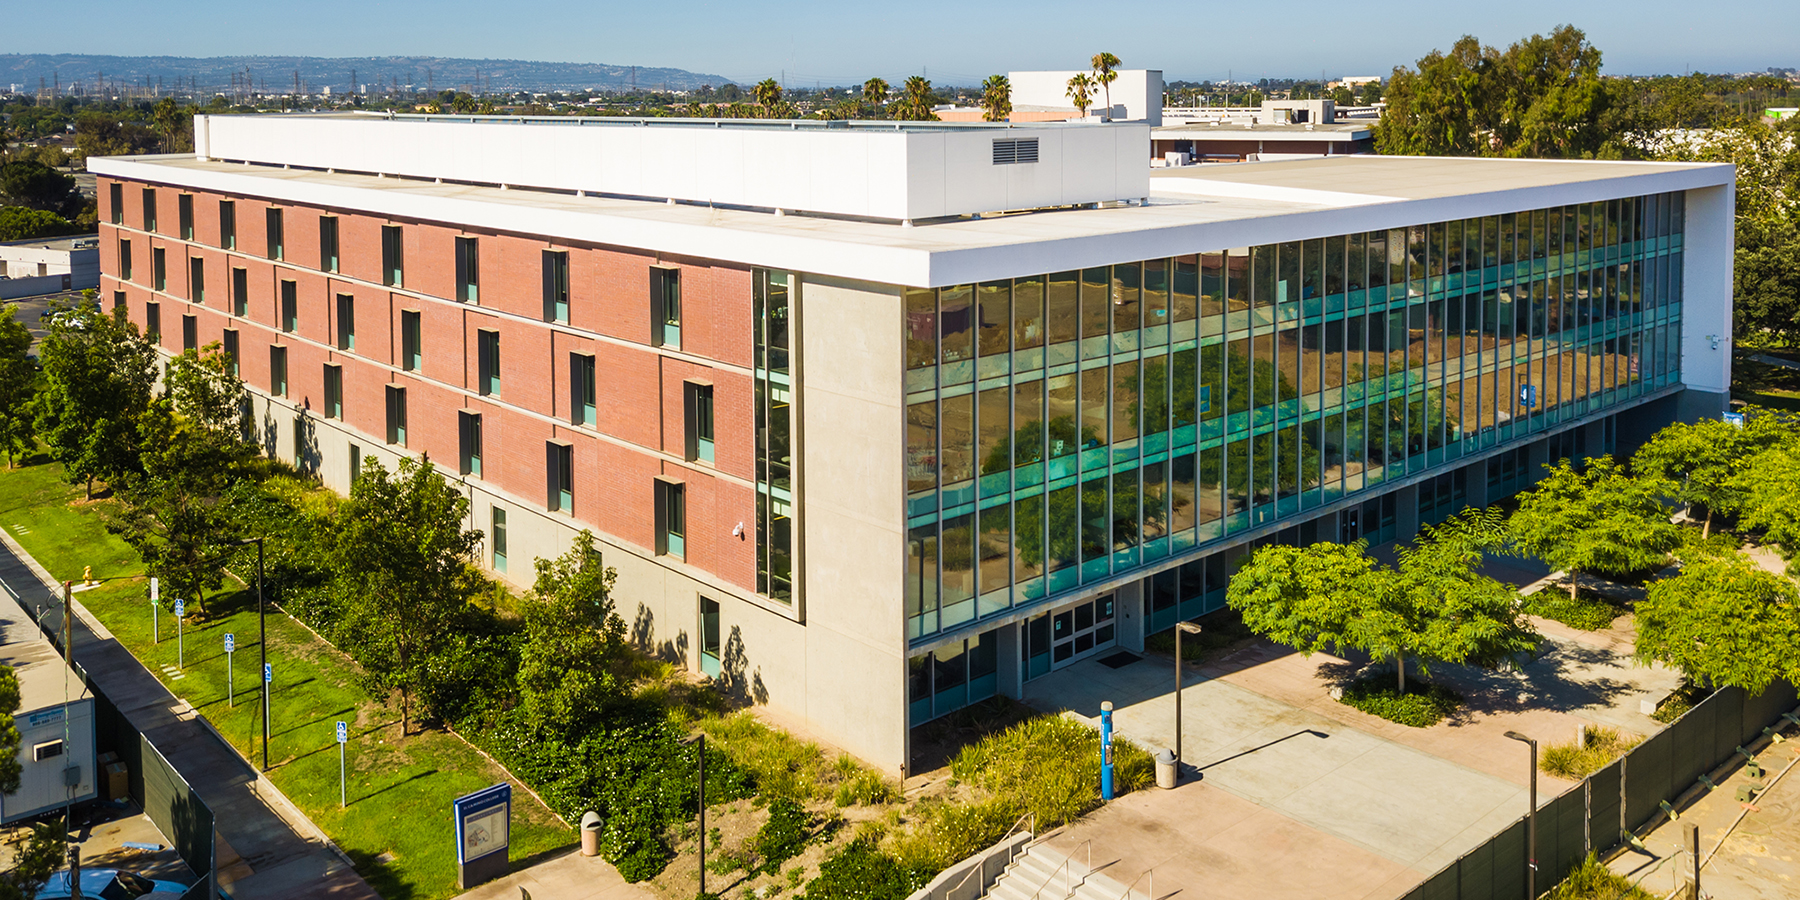 El Camino College in Los Angeles South Bay, glazing project by Azurelite